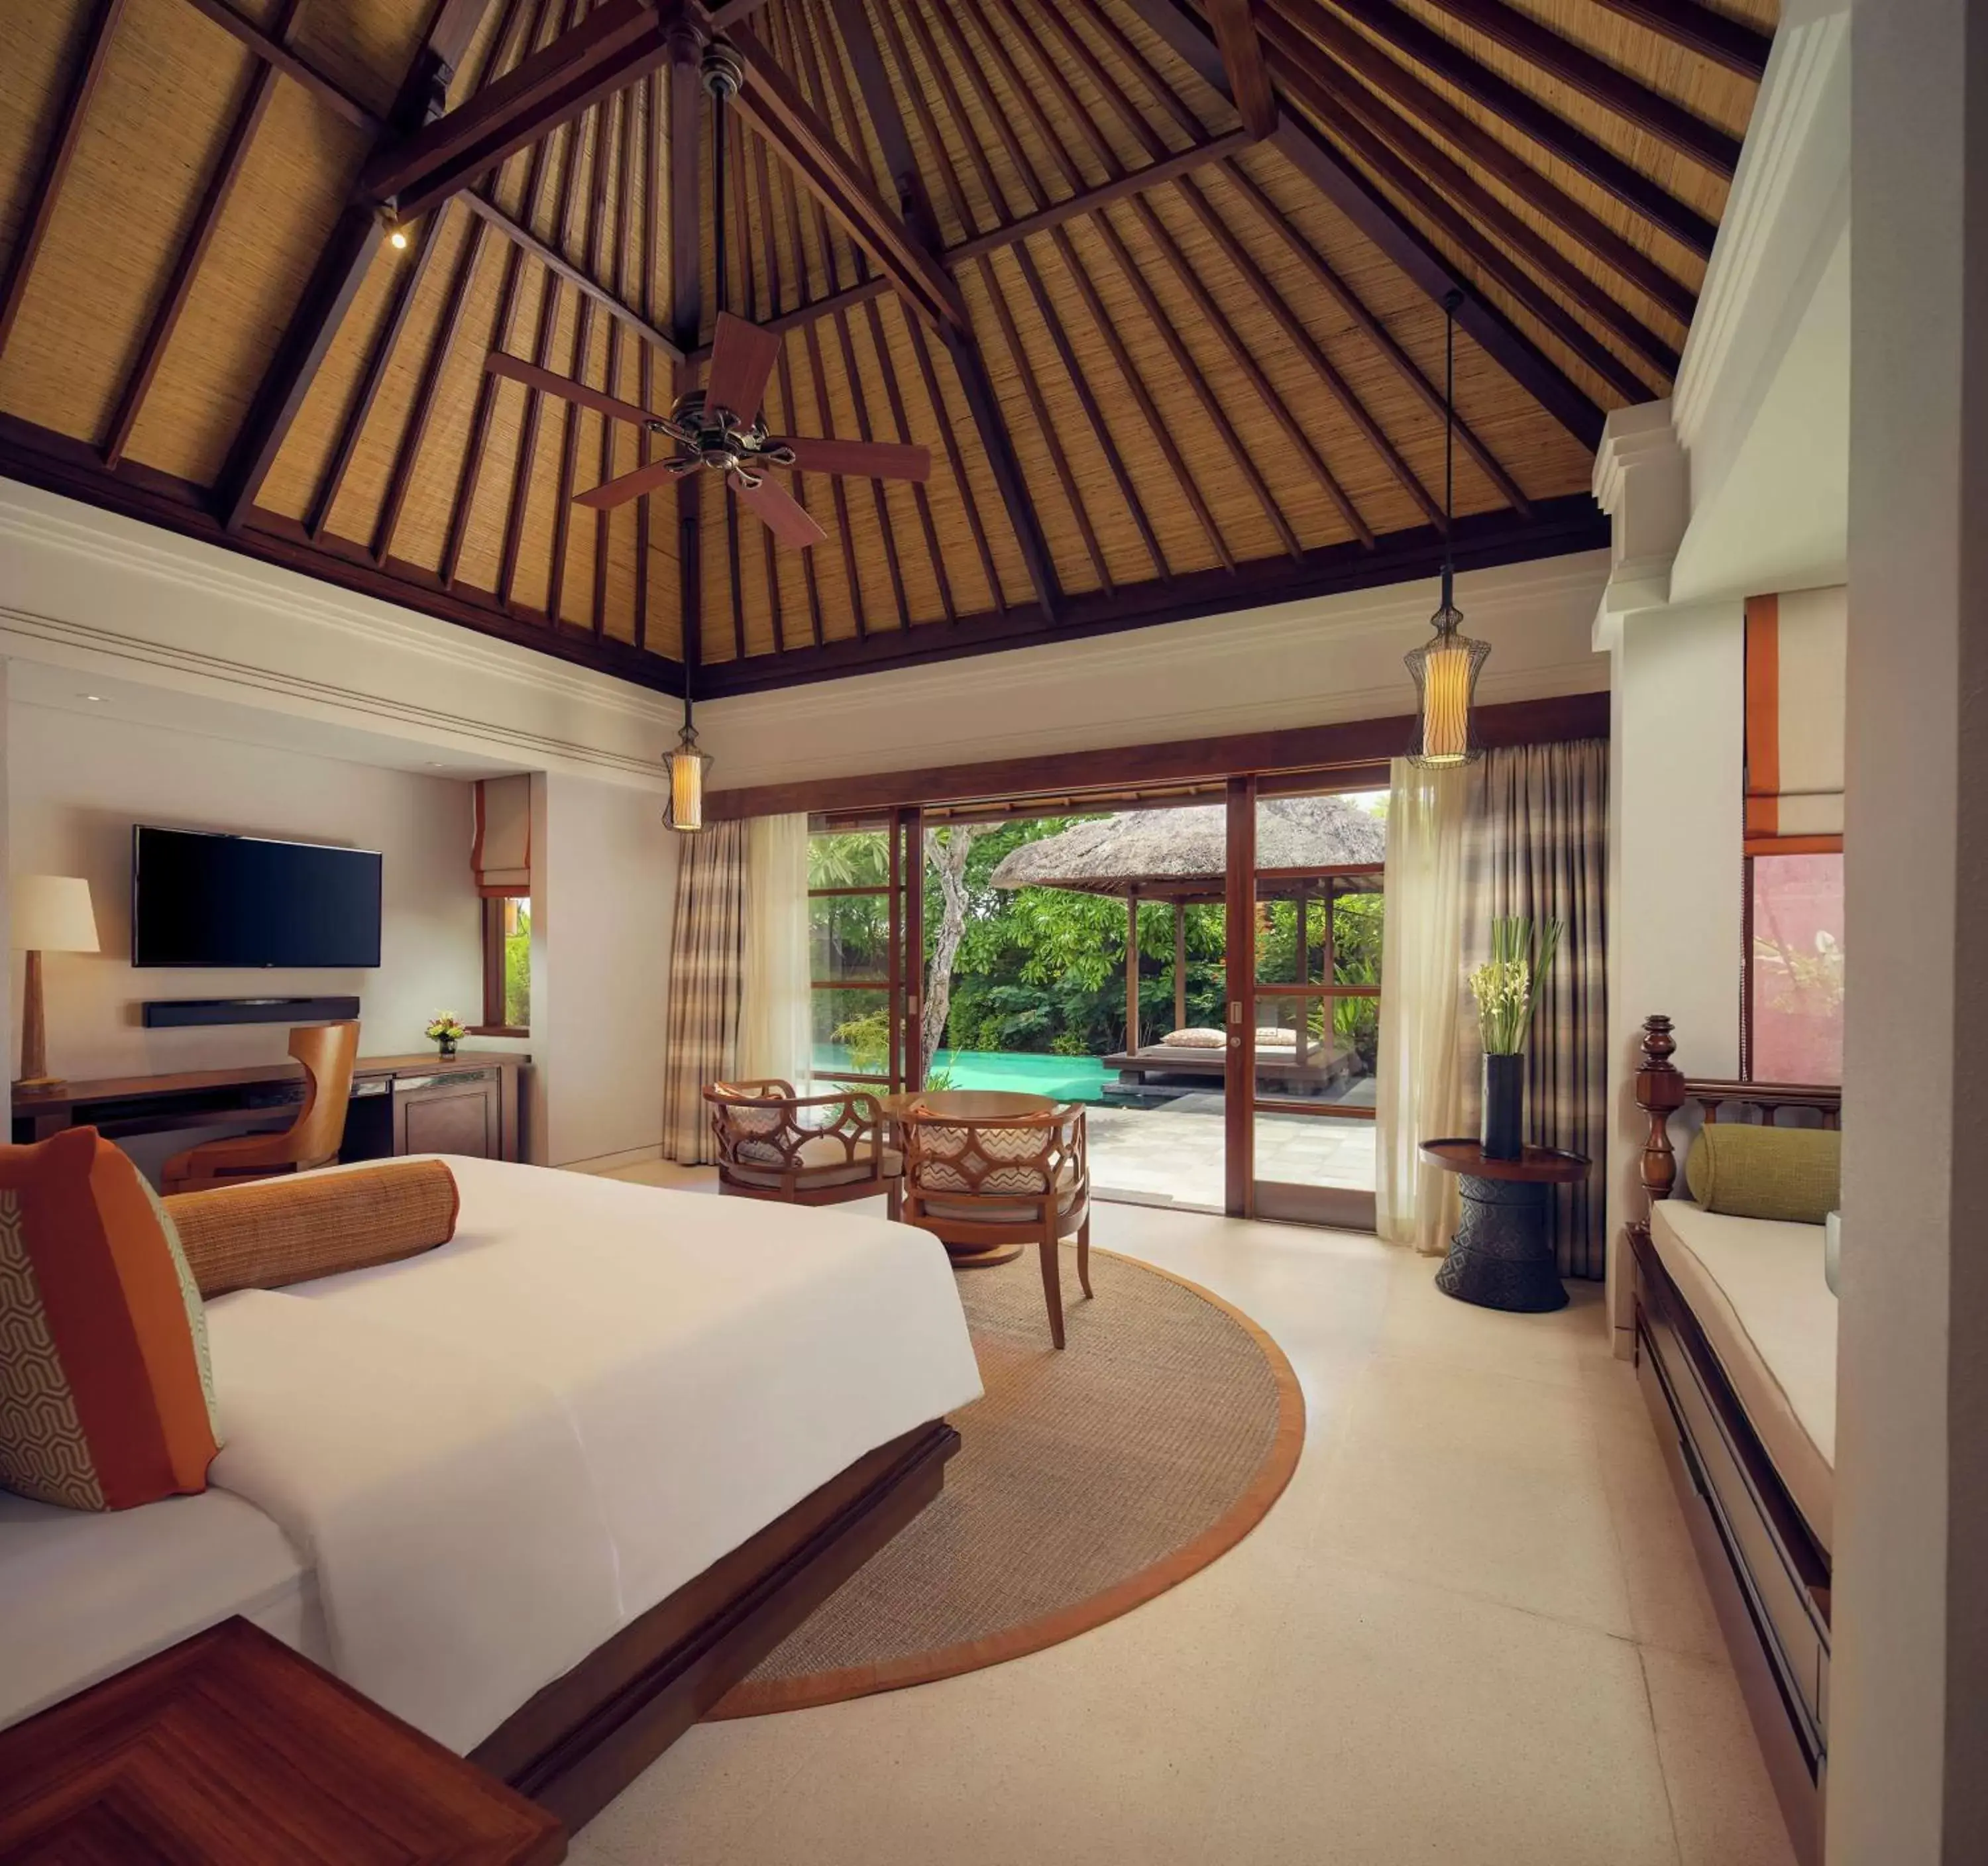 Bed in Hilton Bali Resort